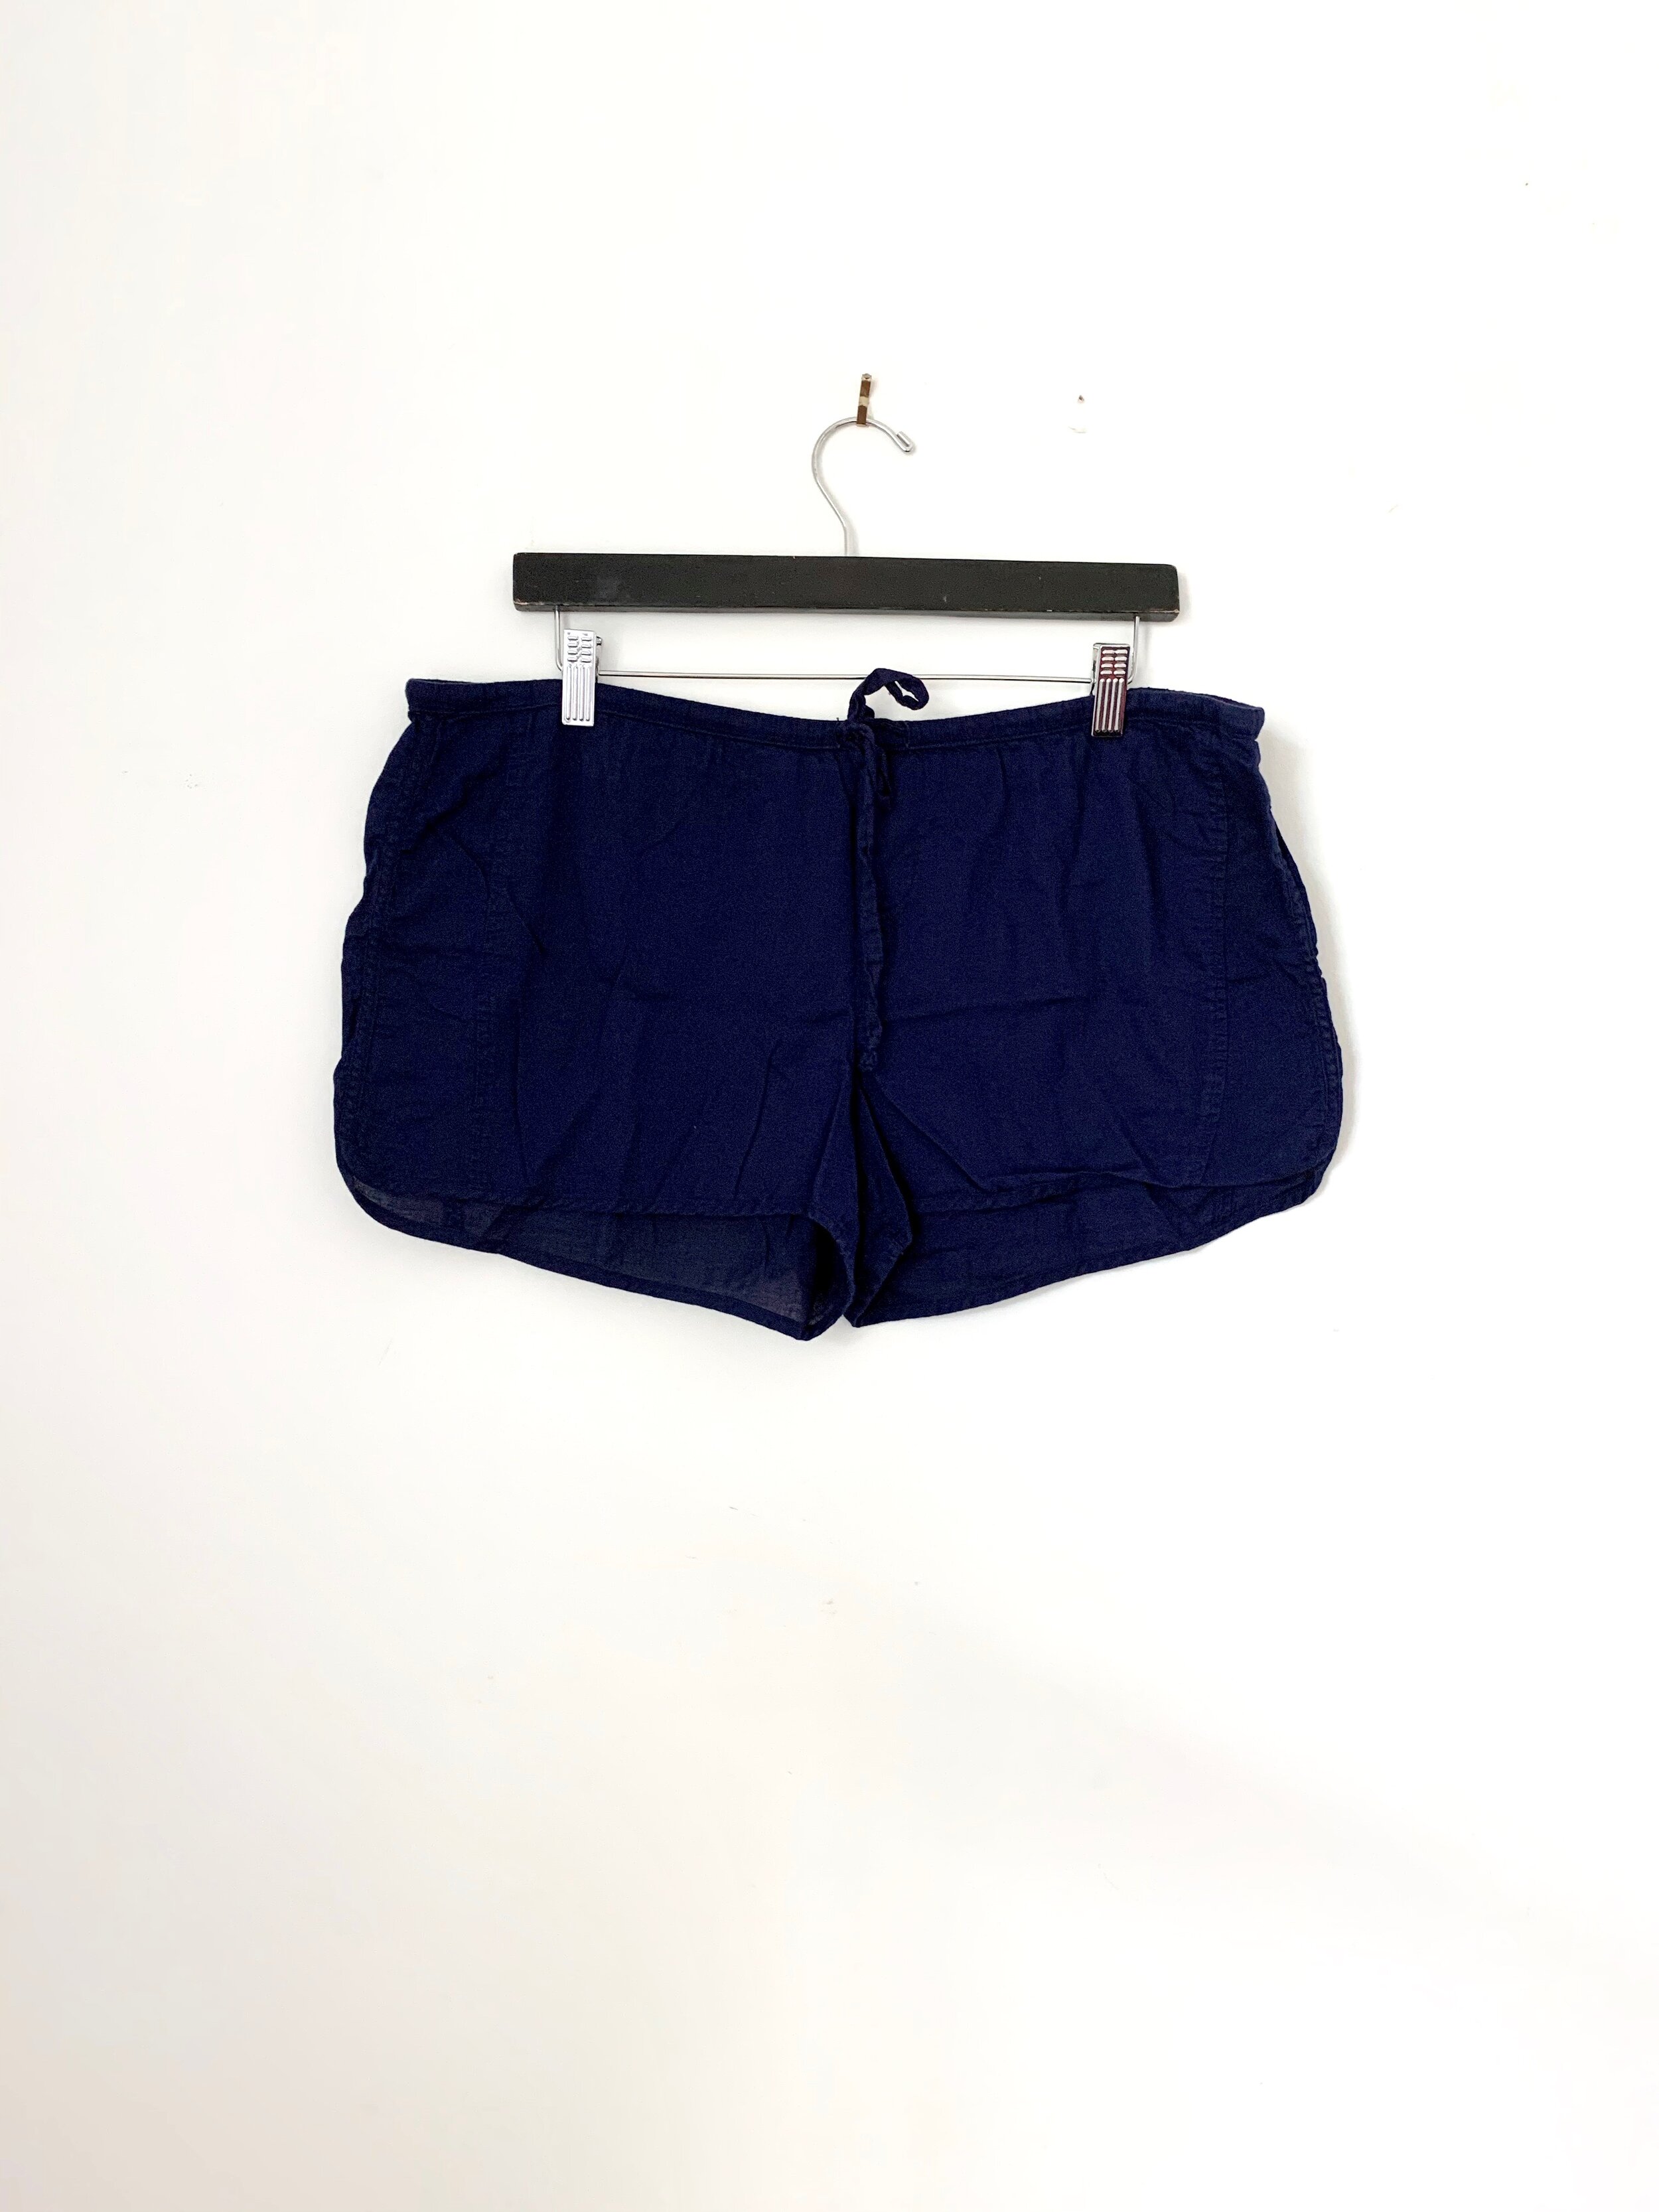 Adorel Girls Short Leggings Bike Shorts Summer Pack of 4 : :  Clothing, Shoes & Accessories